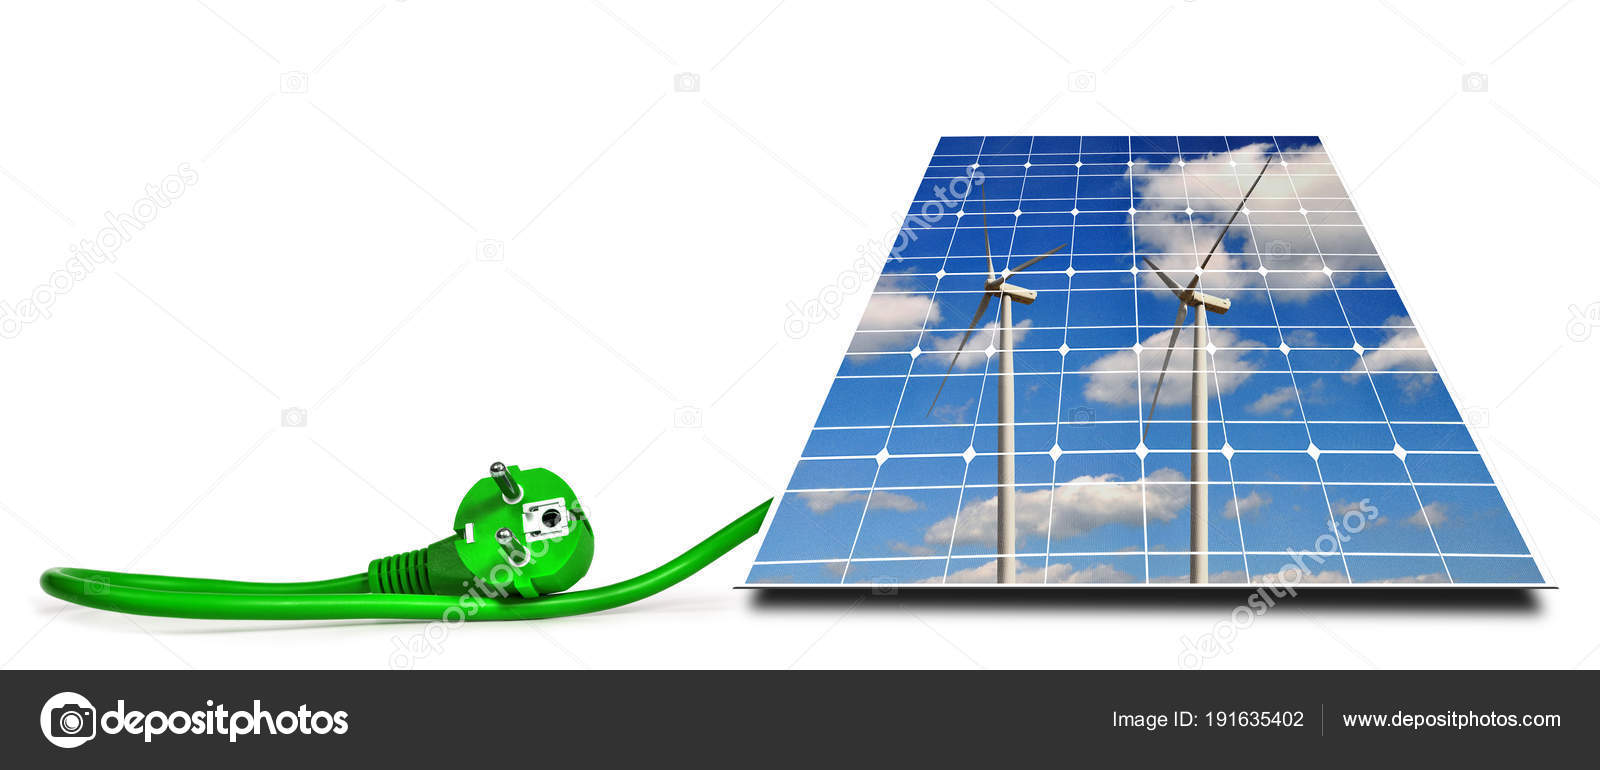 Plug in solar